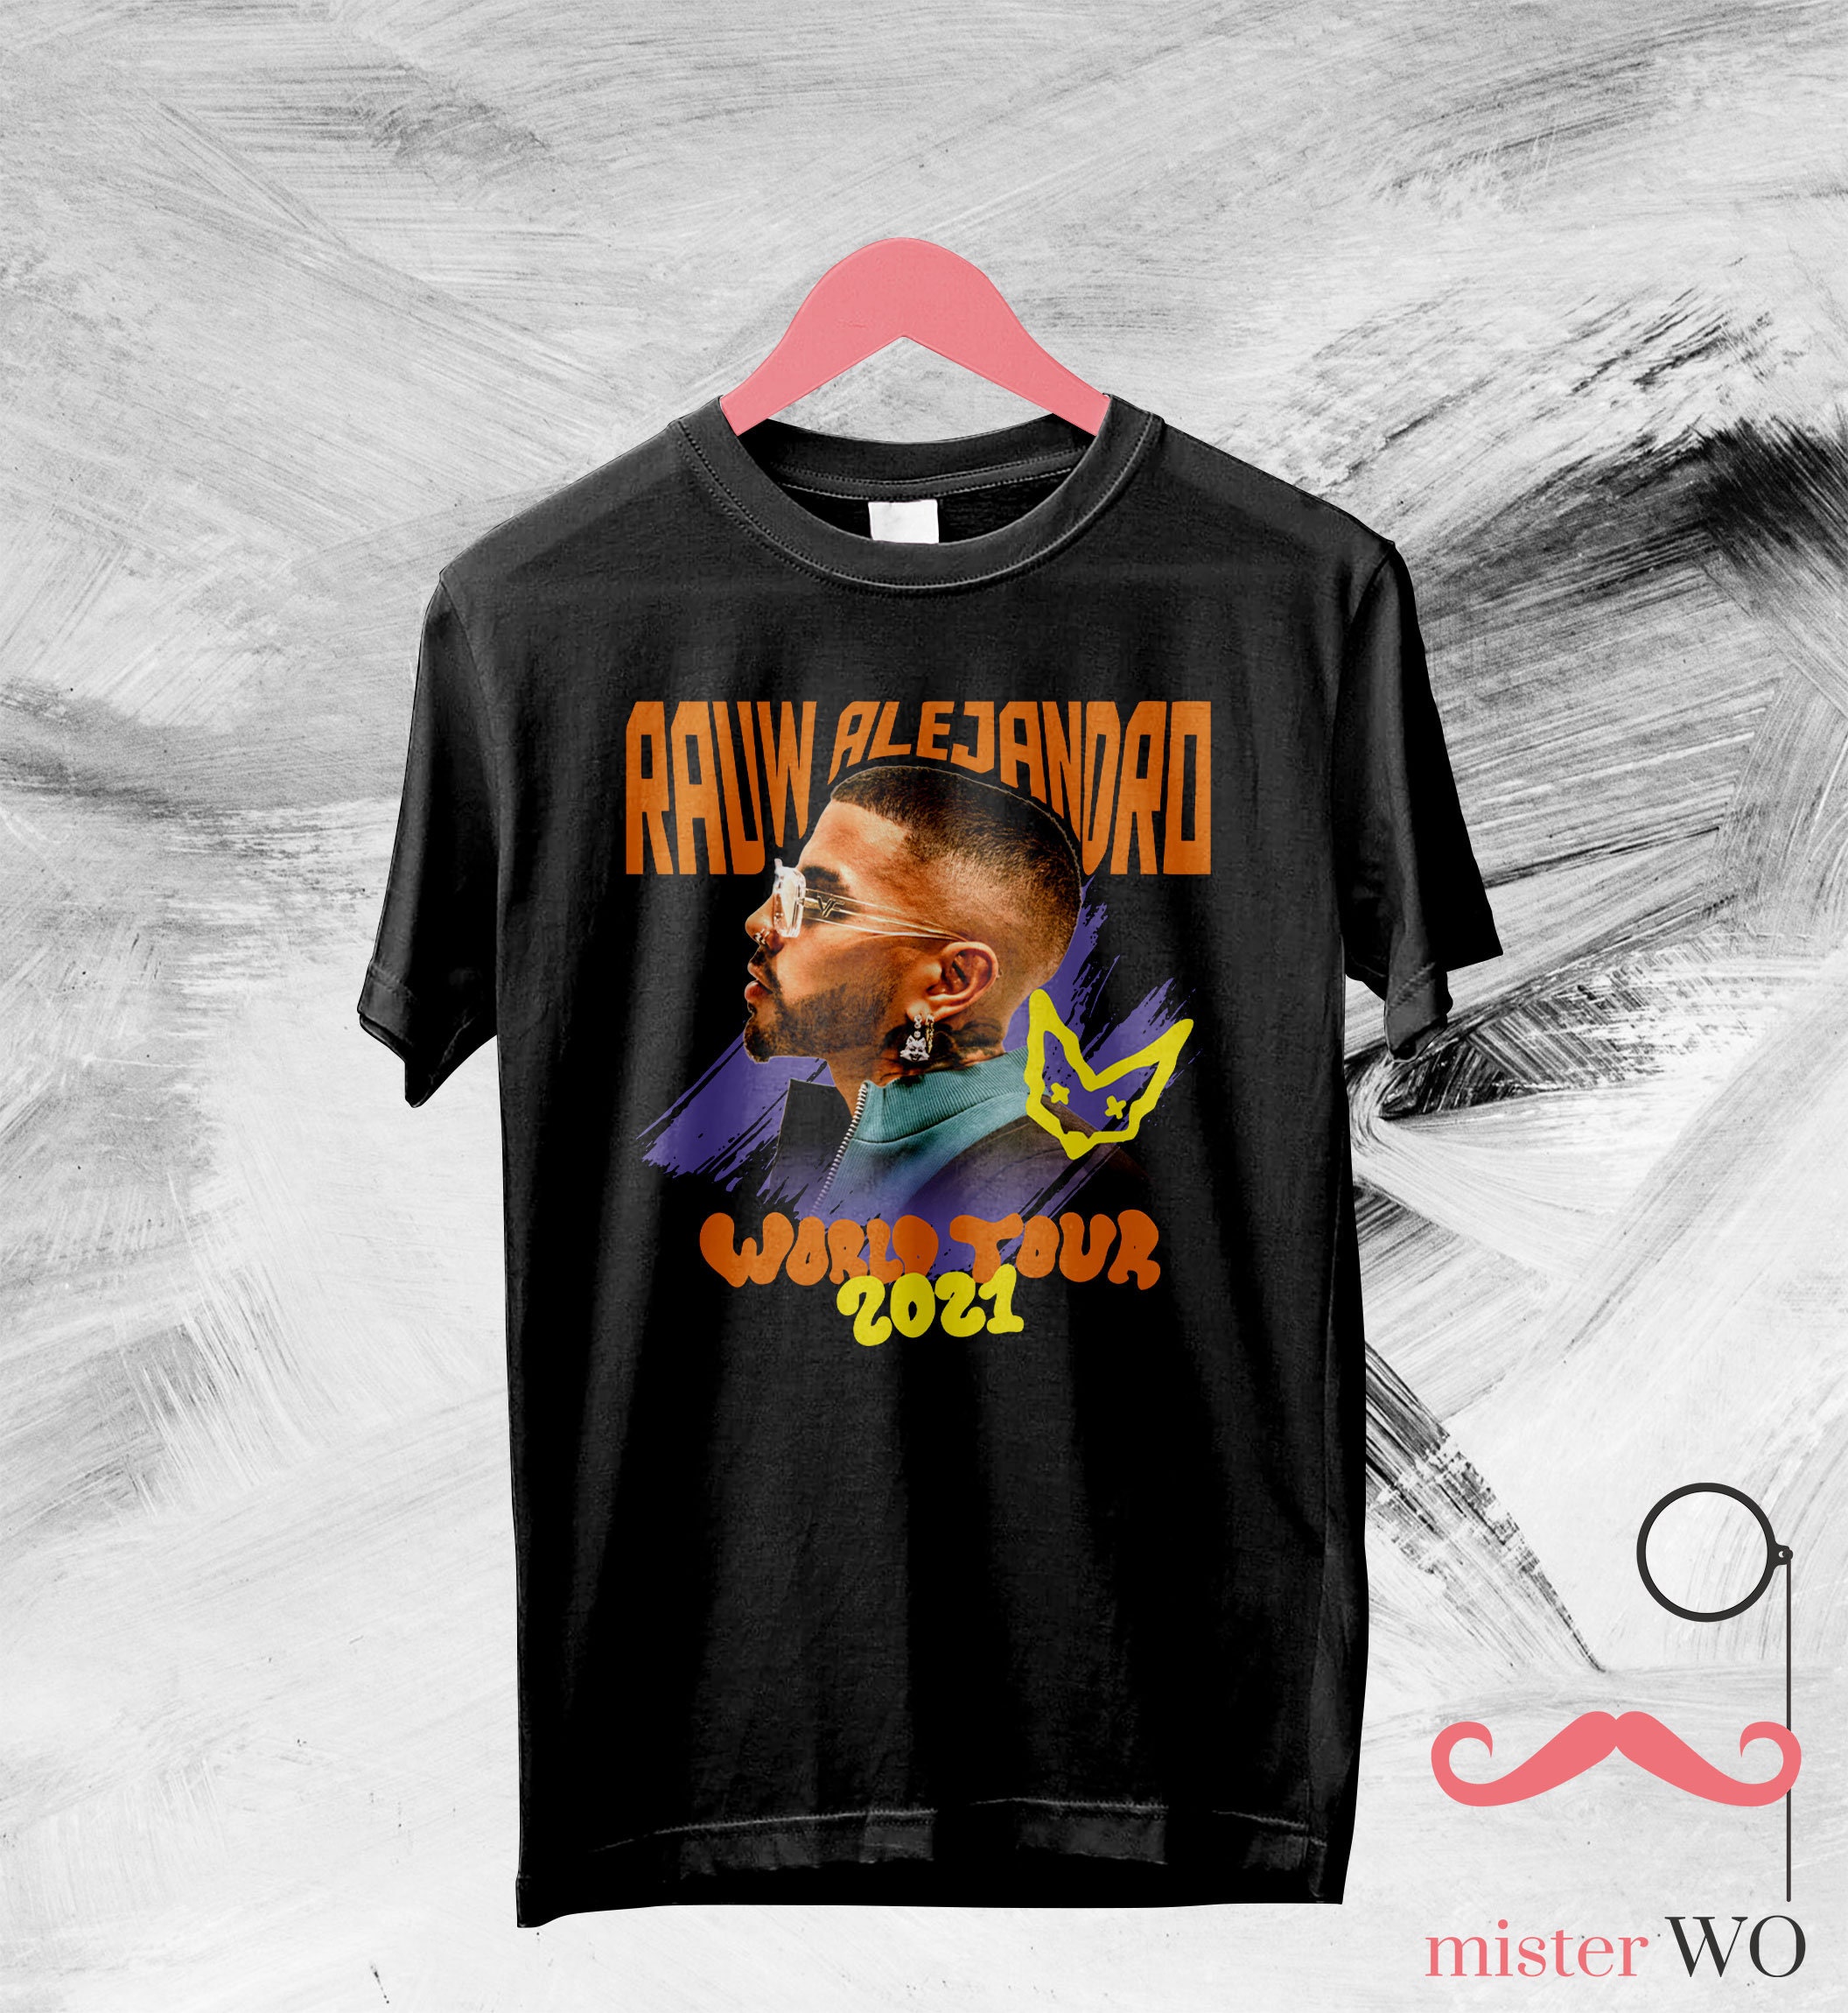 Rauw Alejandro World Tour 2021 T-Shirt - Rauw Alejandro Shirt